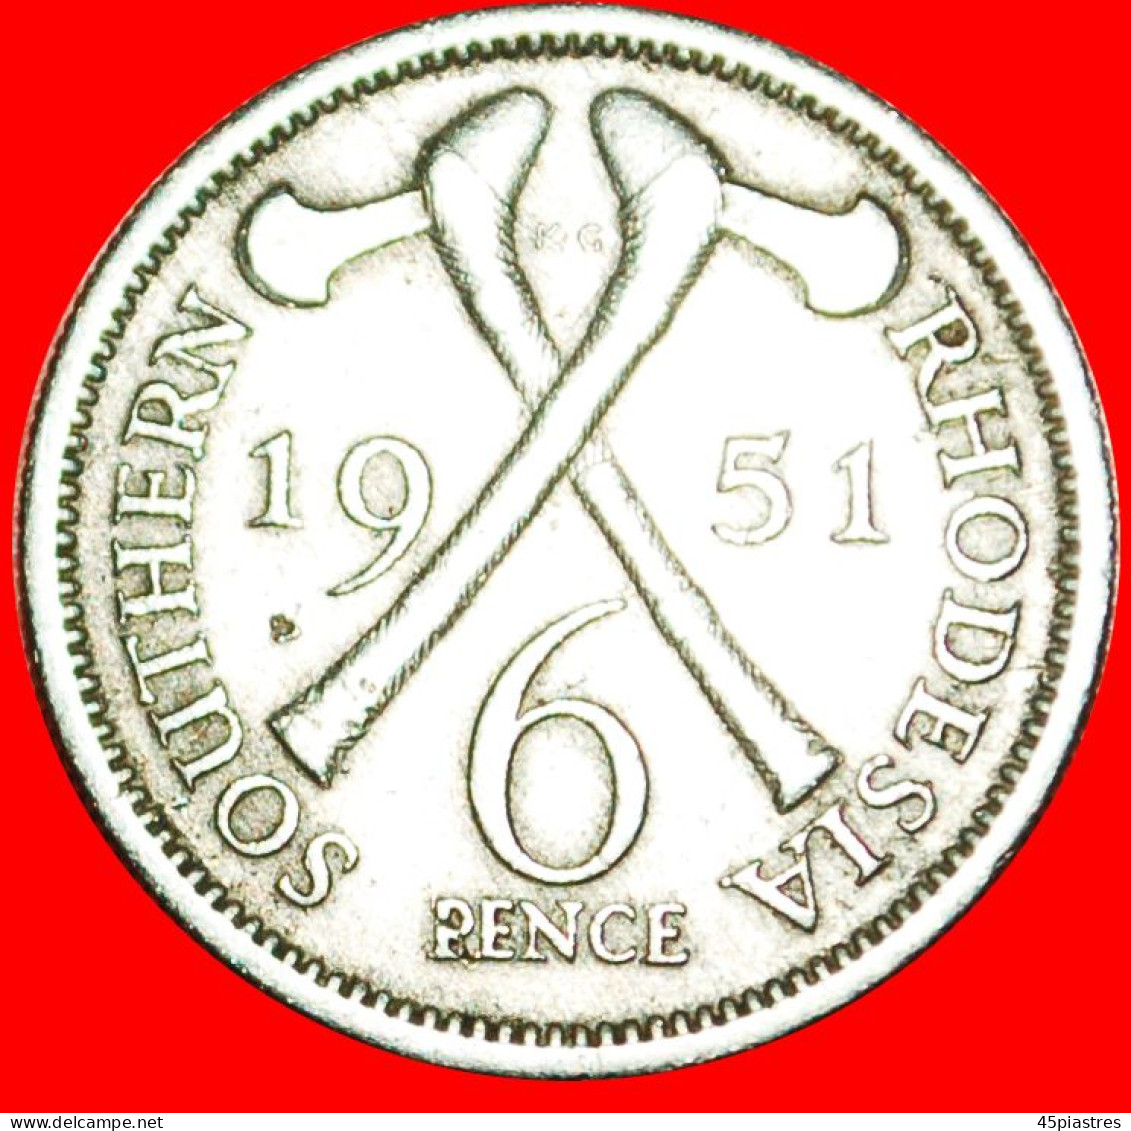 &#9733;2 AXES: SOUTHERN RHODESIA &#9733; 6 PENCE 1951! LOW START&#9733;NO RESERVE! George VI (1937-1952) - Rhodésie